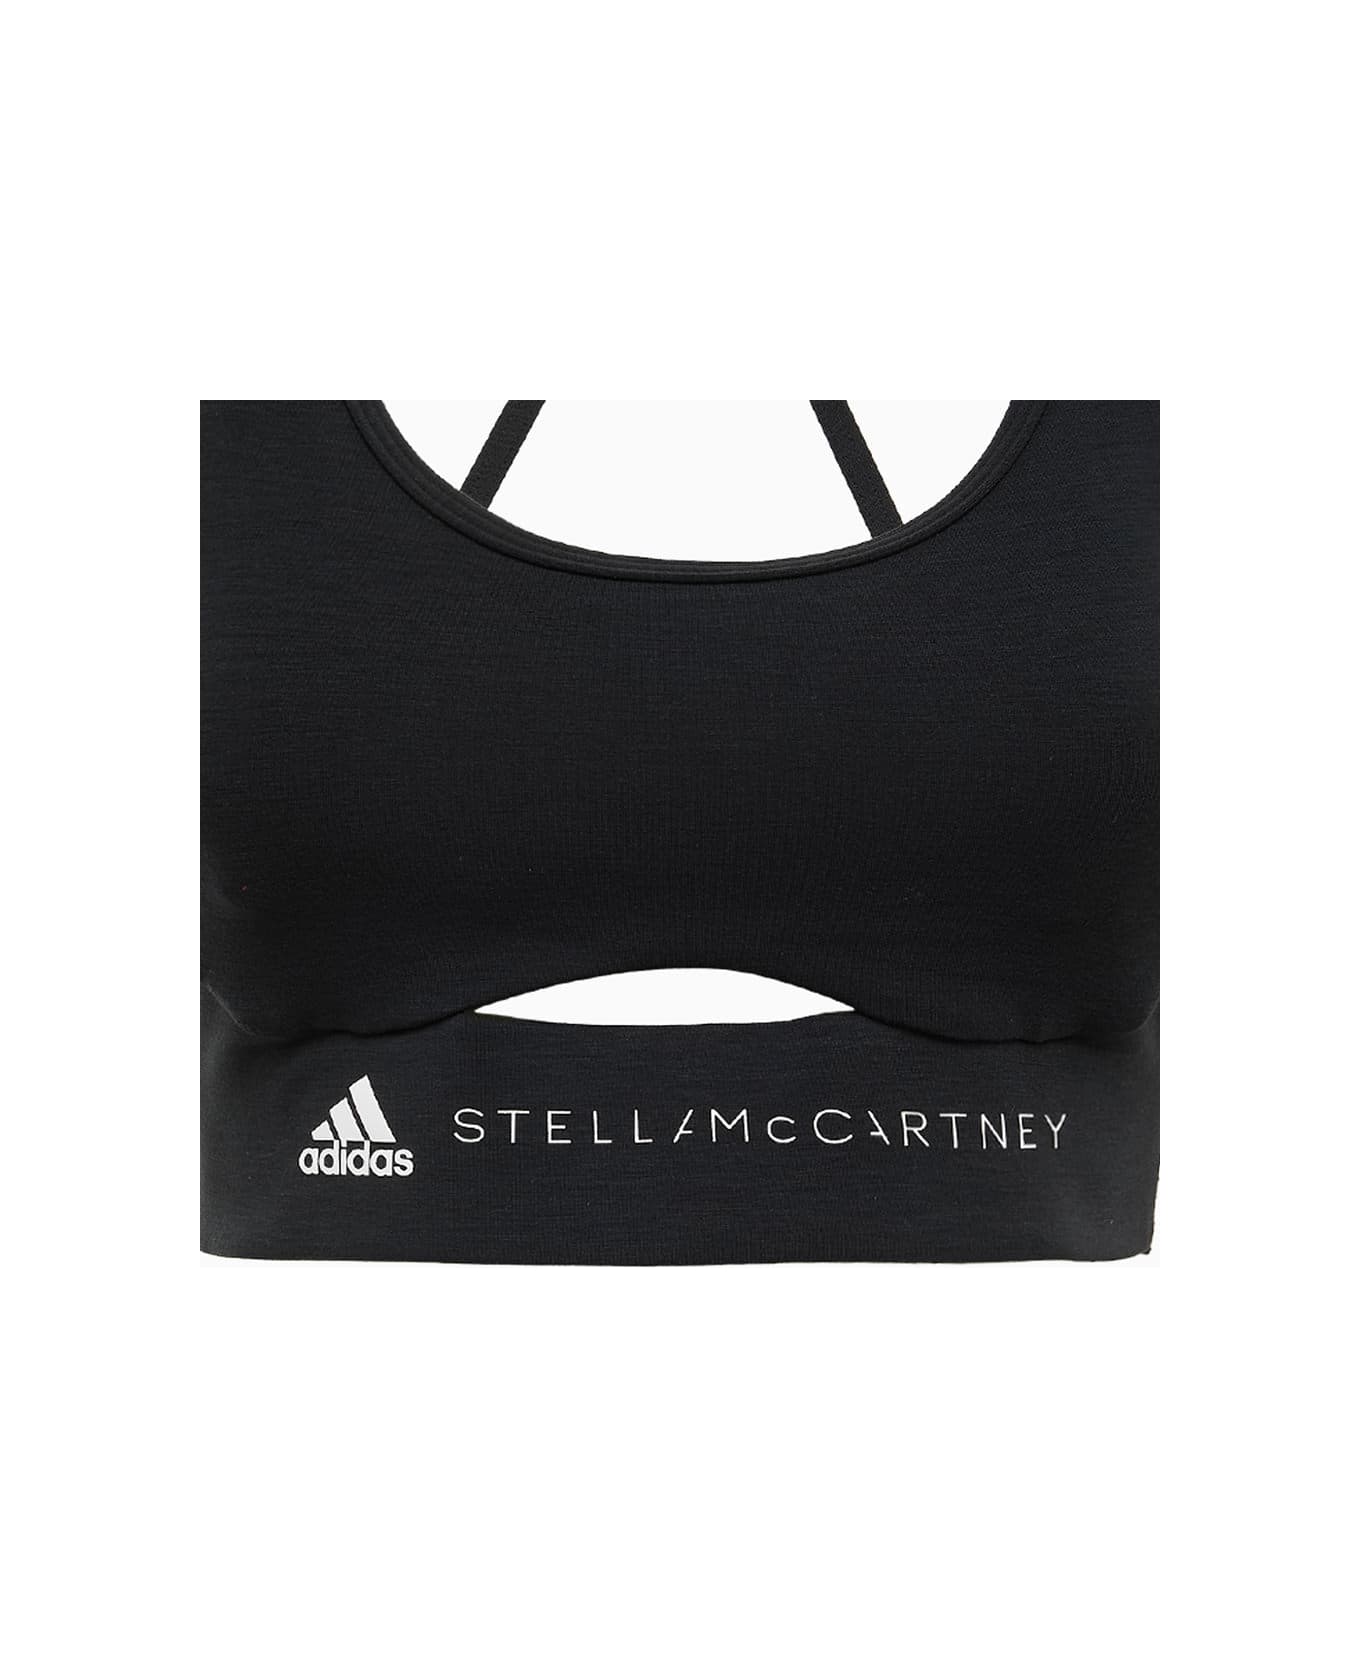 Adidas by Stella McCartney Top Hr2192 - Black White